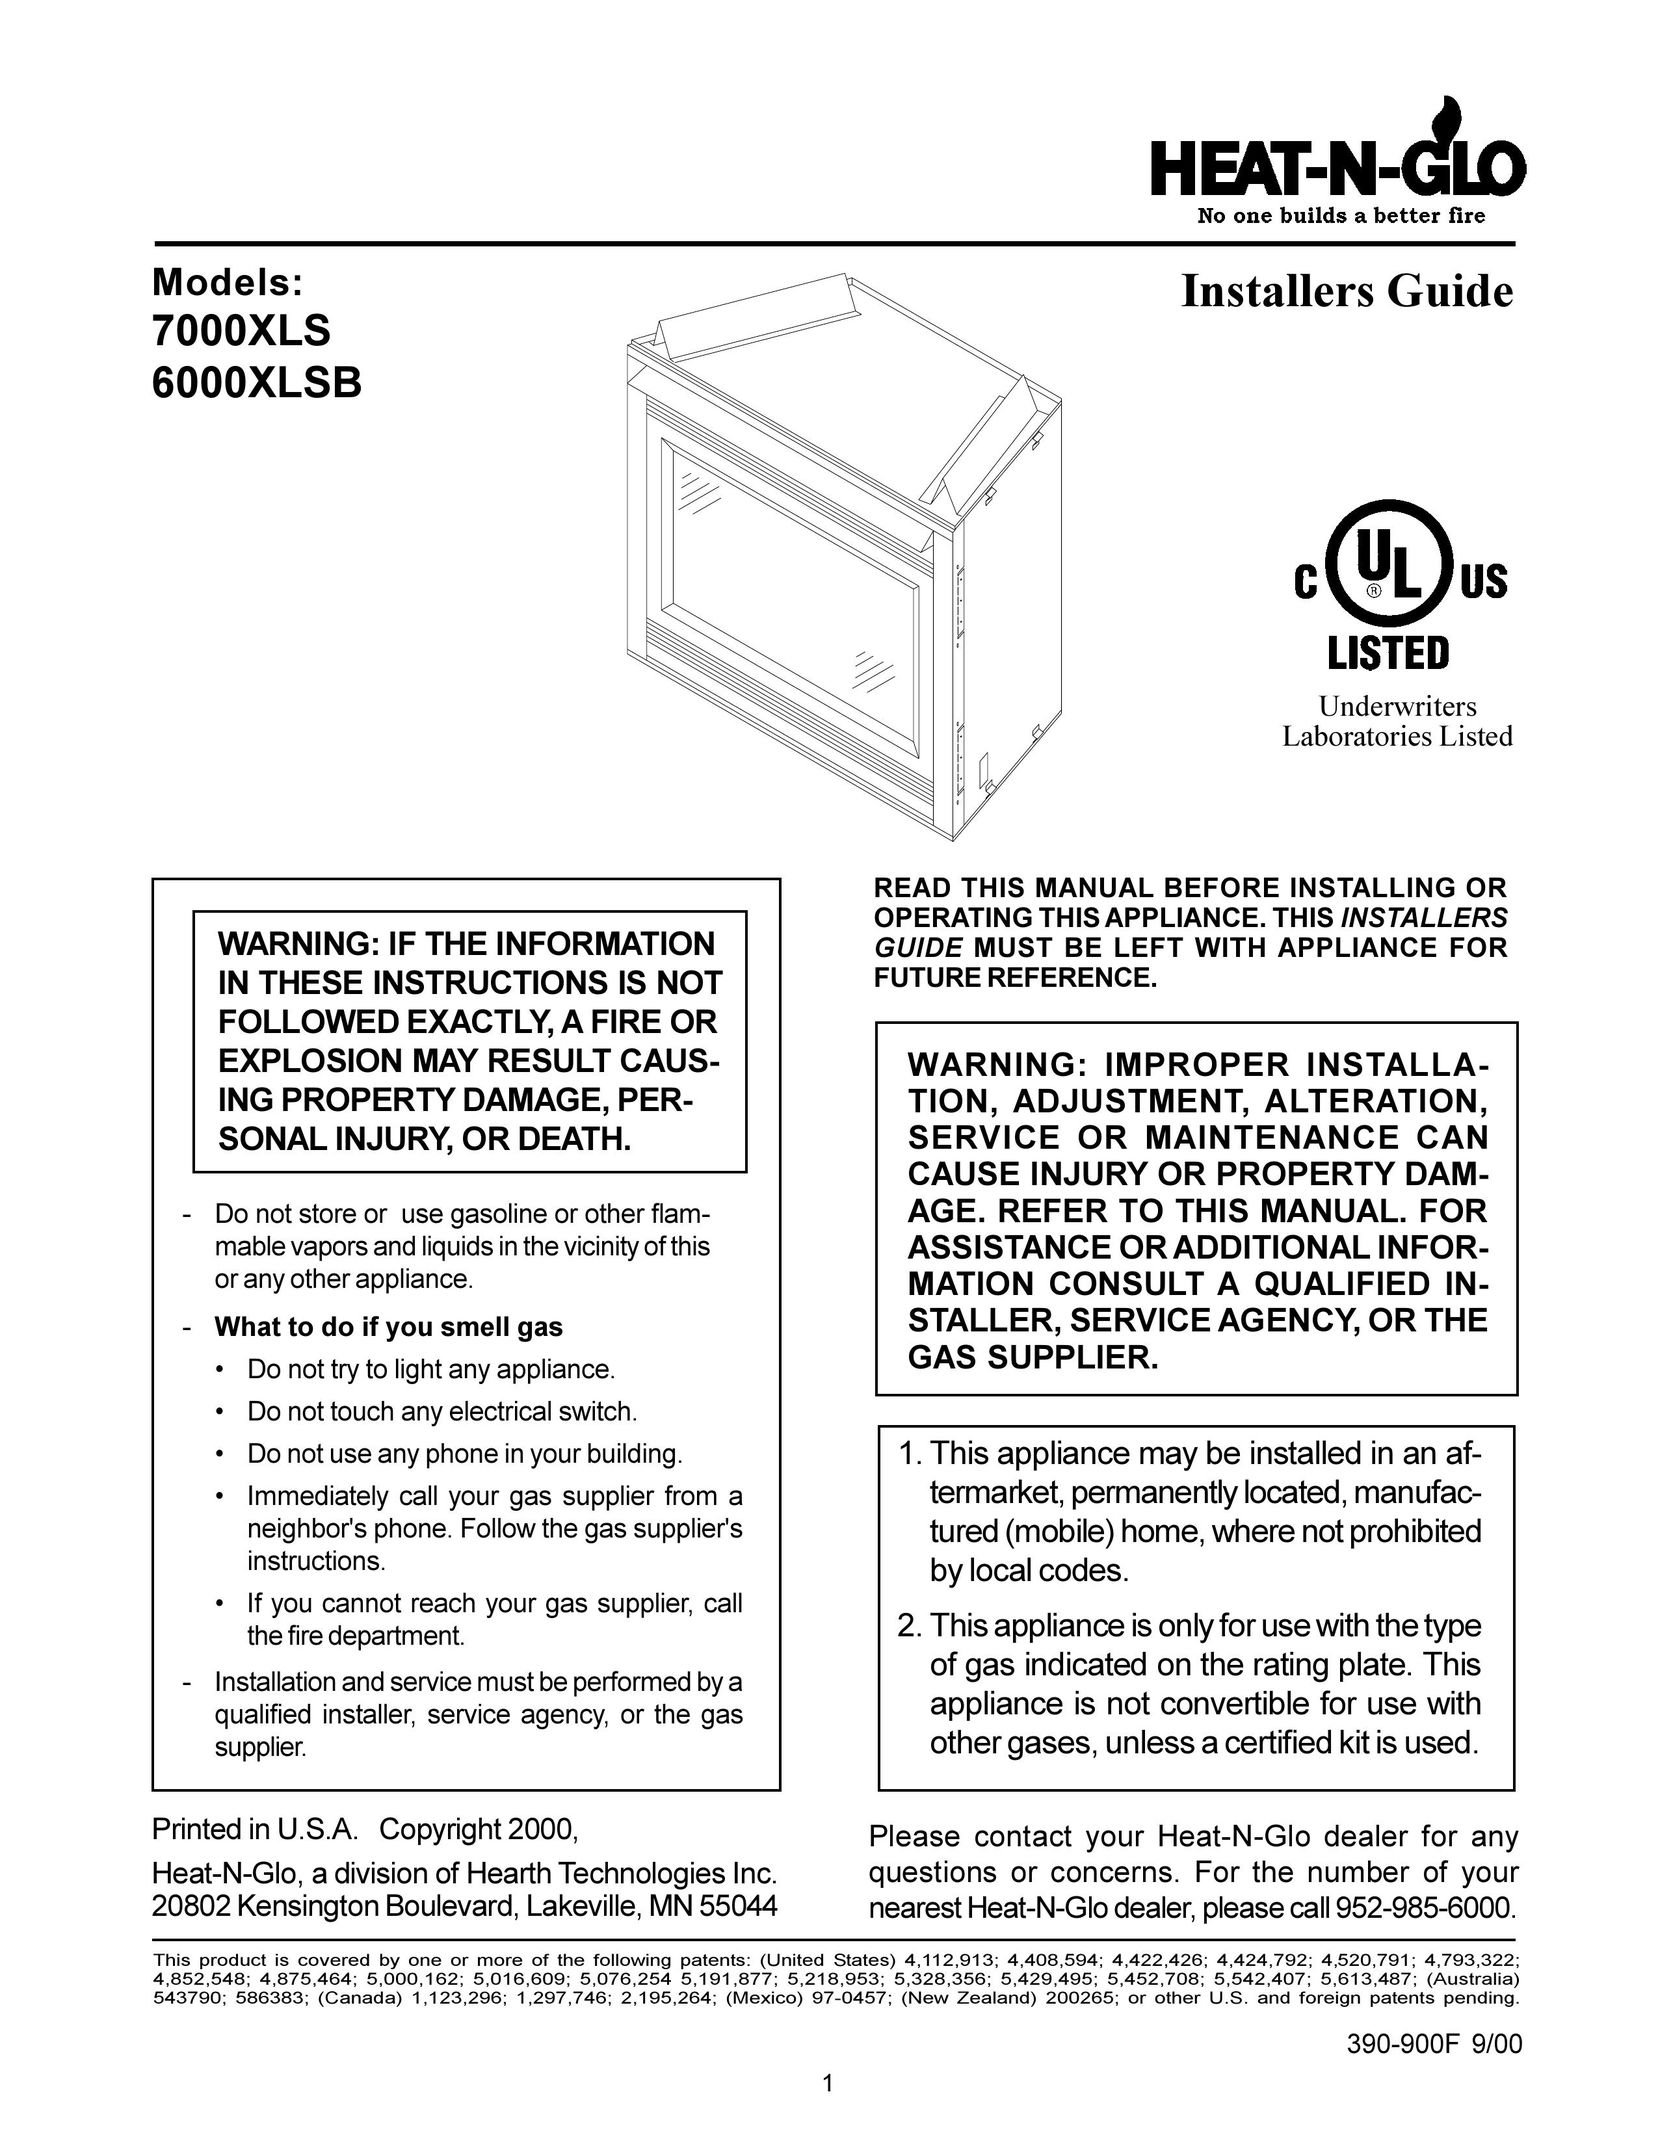 Heat & Glo LifeStyle 6000XLSB Gas Heater User Manual